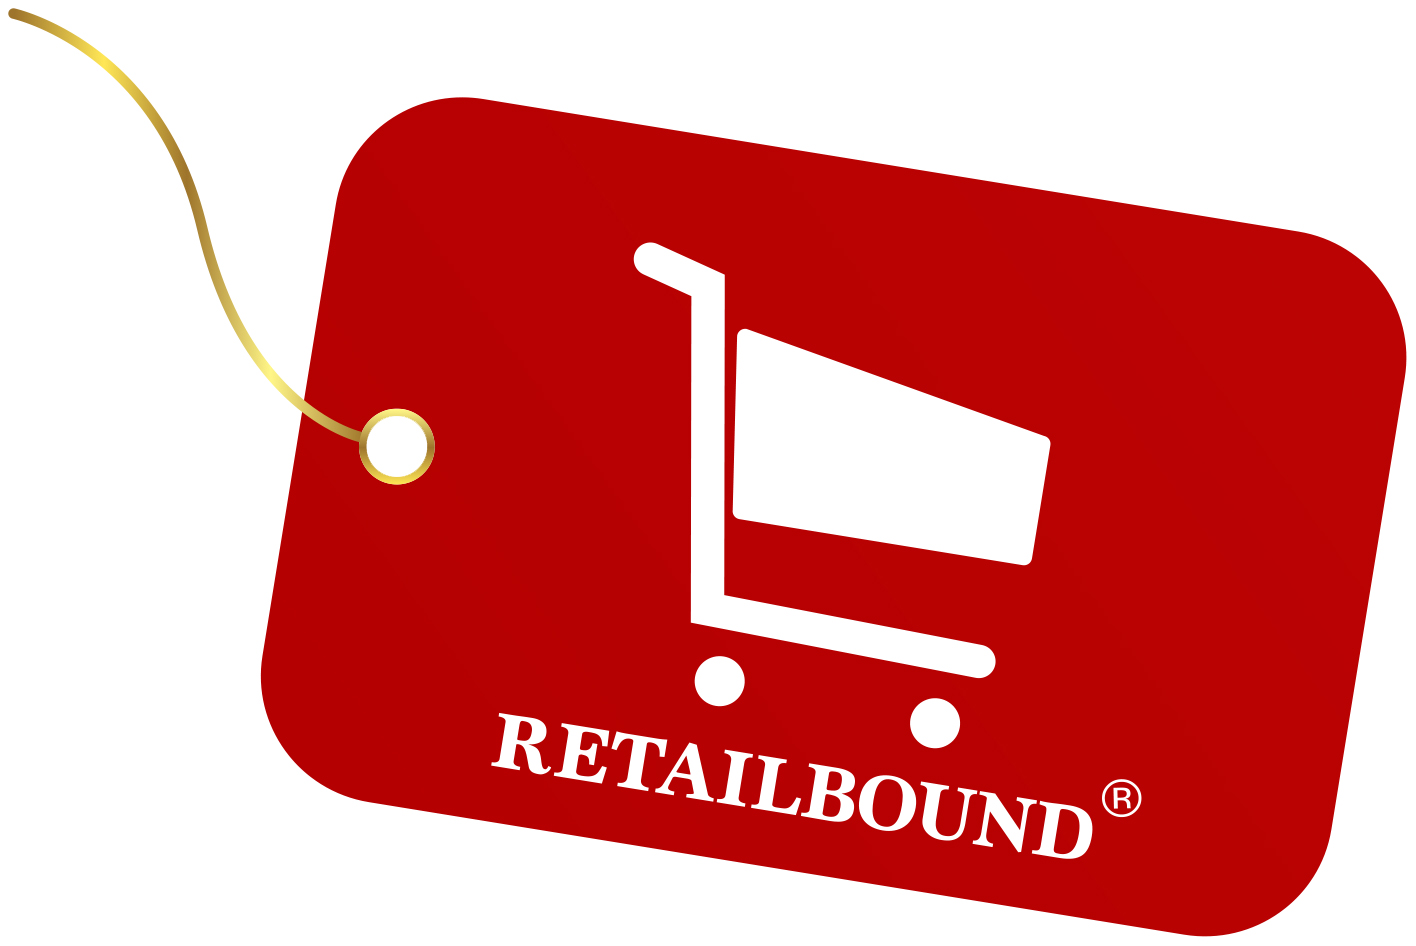 RetailBound Franchise